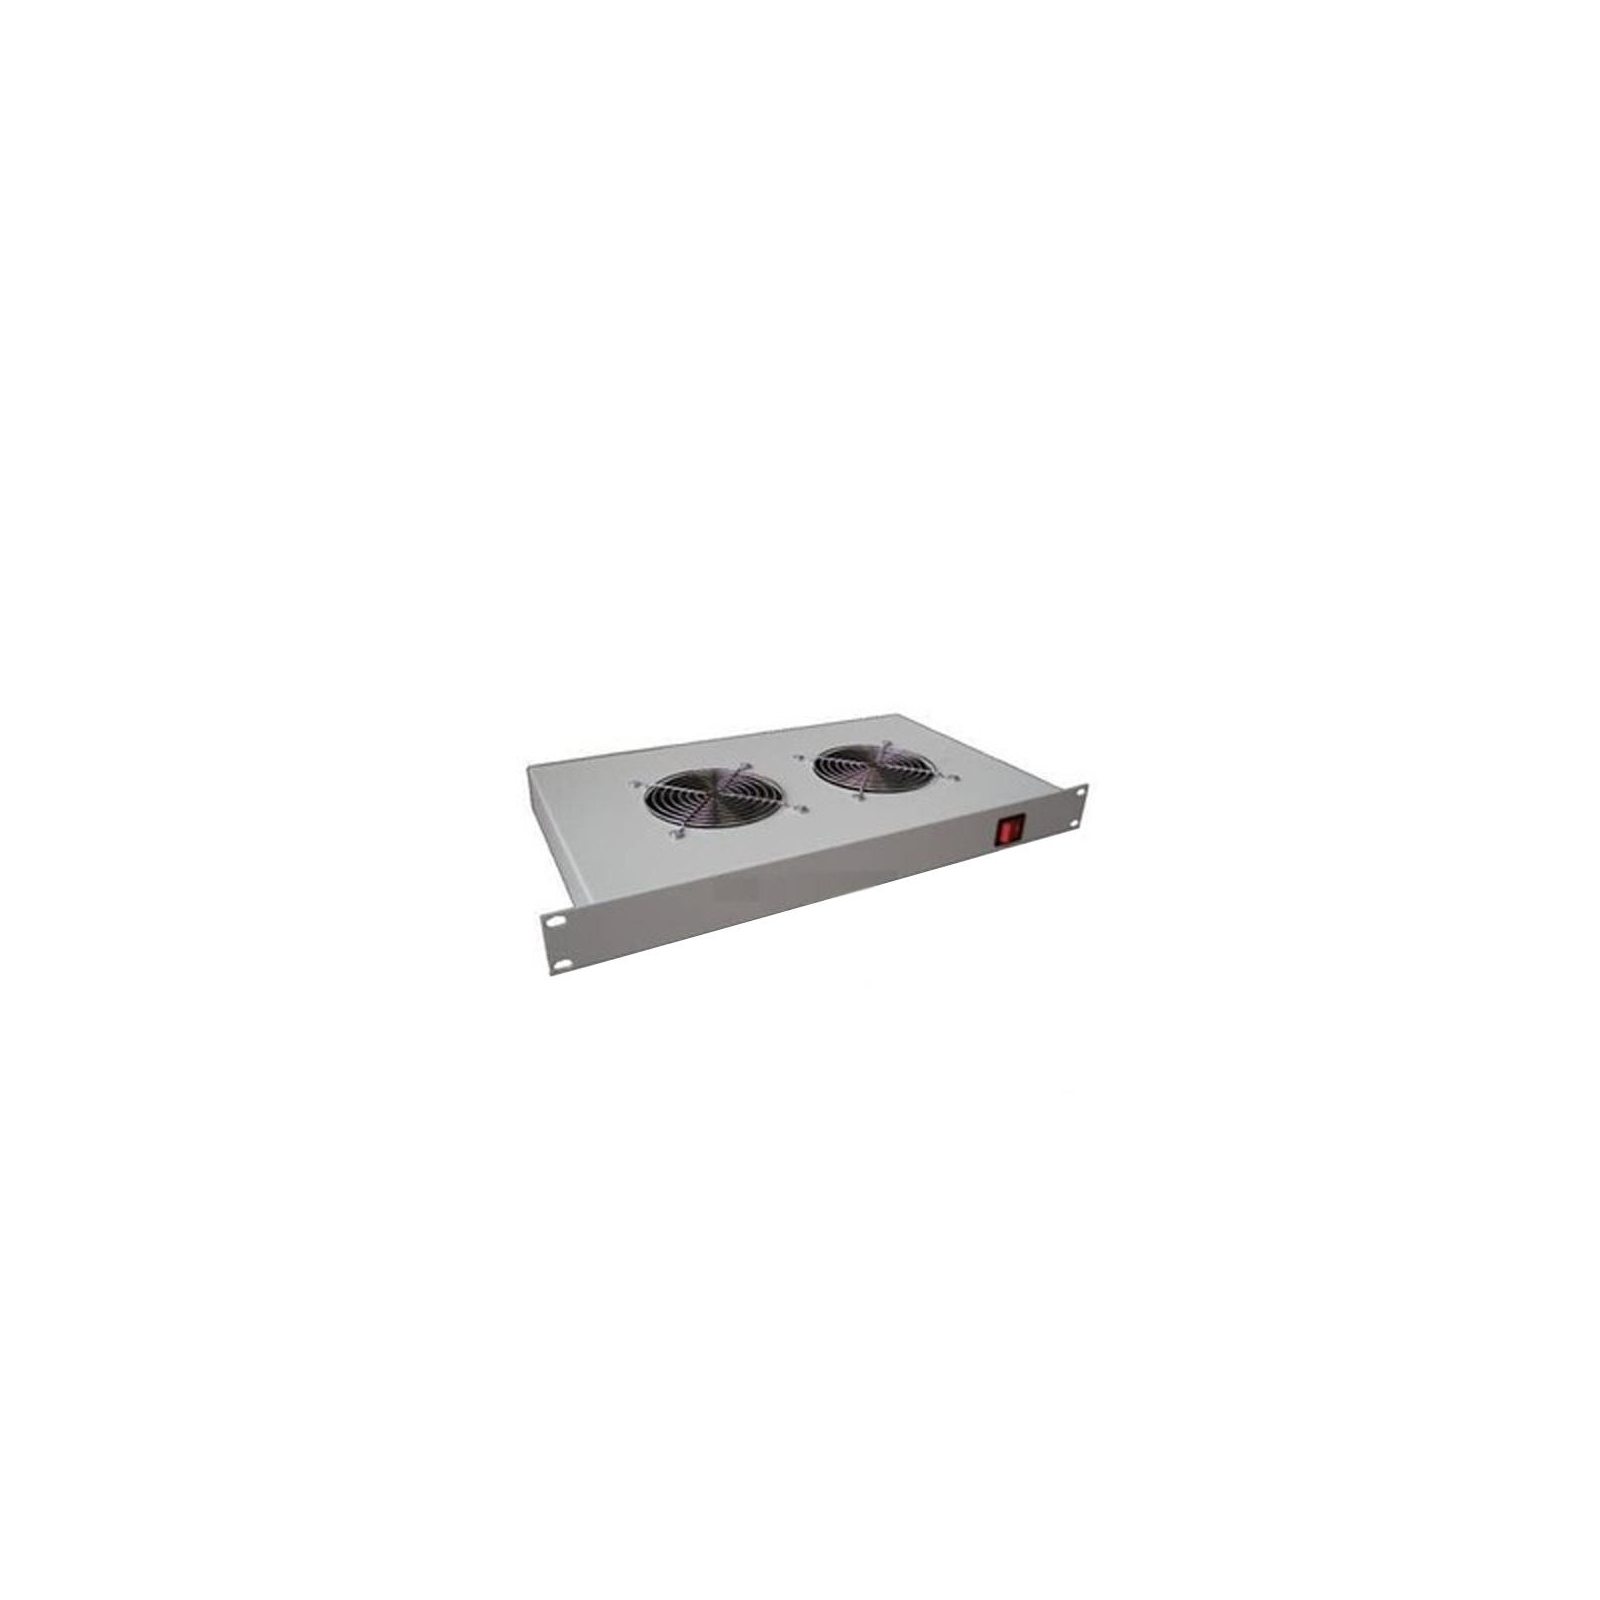 Вентиляторный модуль CSV 2 вентилятора для шкафа (00893)